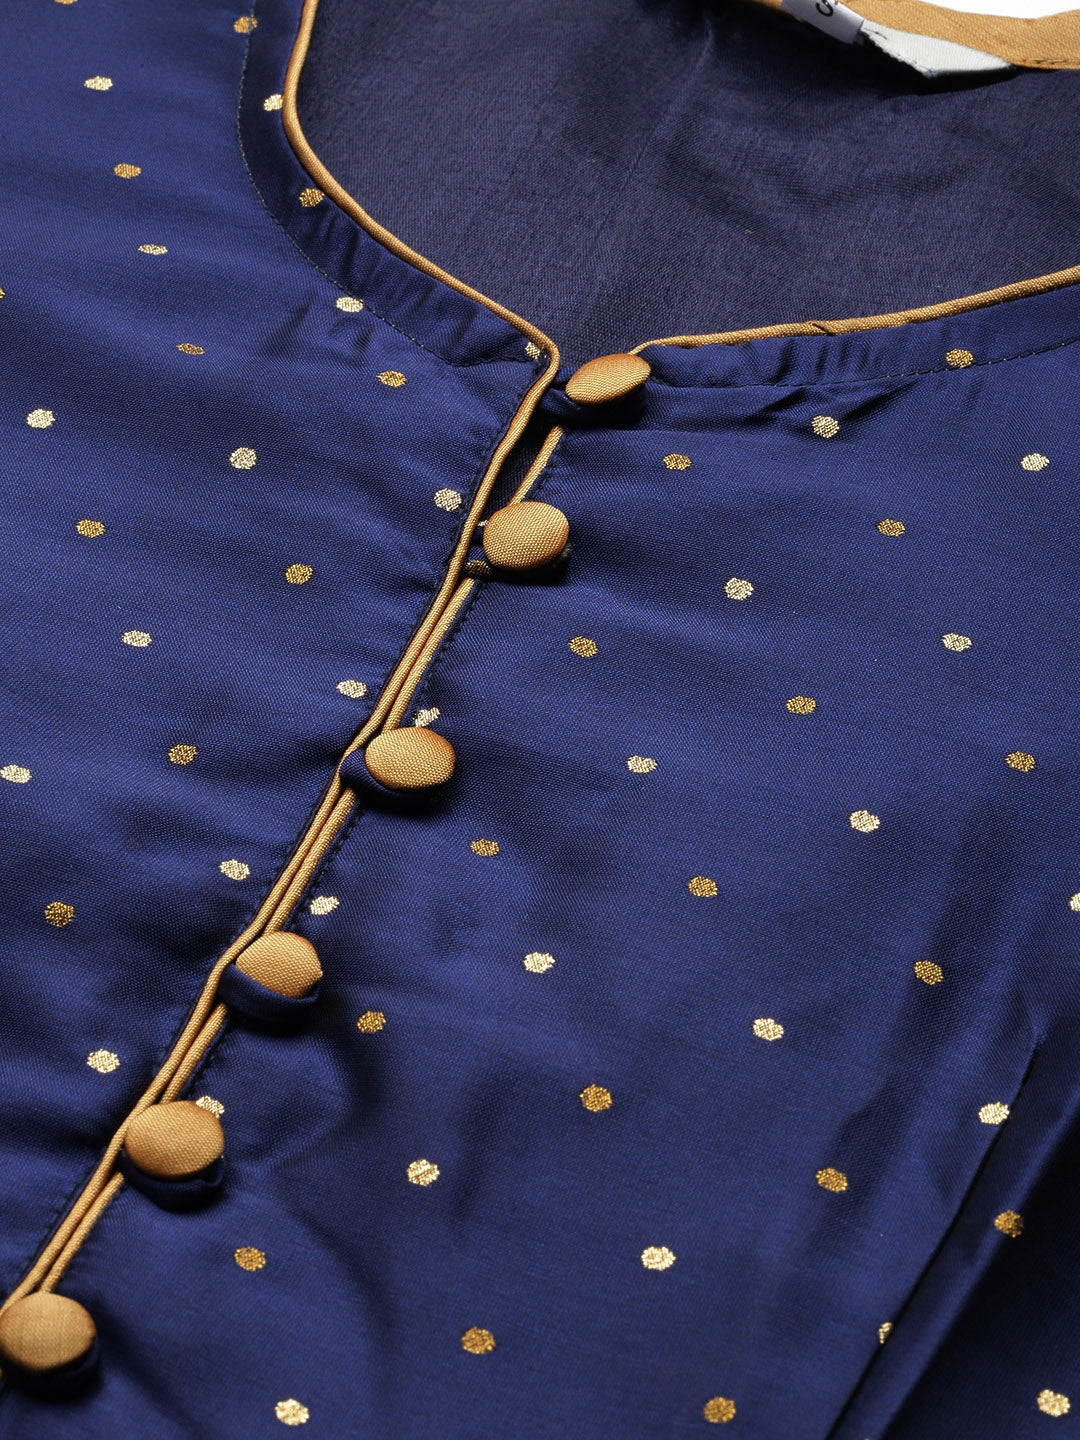 Women's Navy Blue And Golden Woven Design Anarkali Kurta, - Bhama Couture